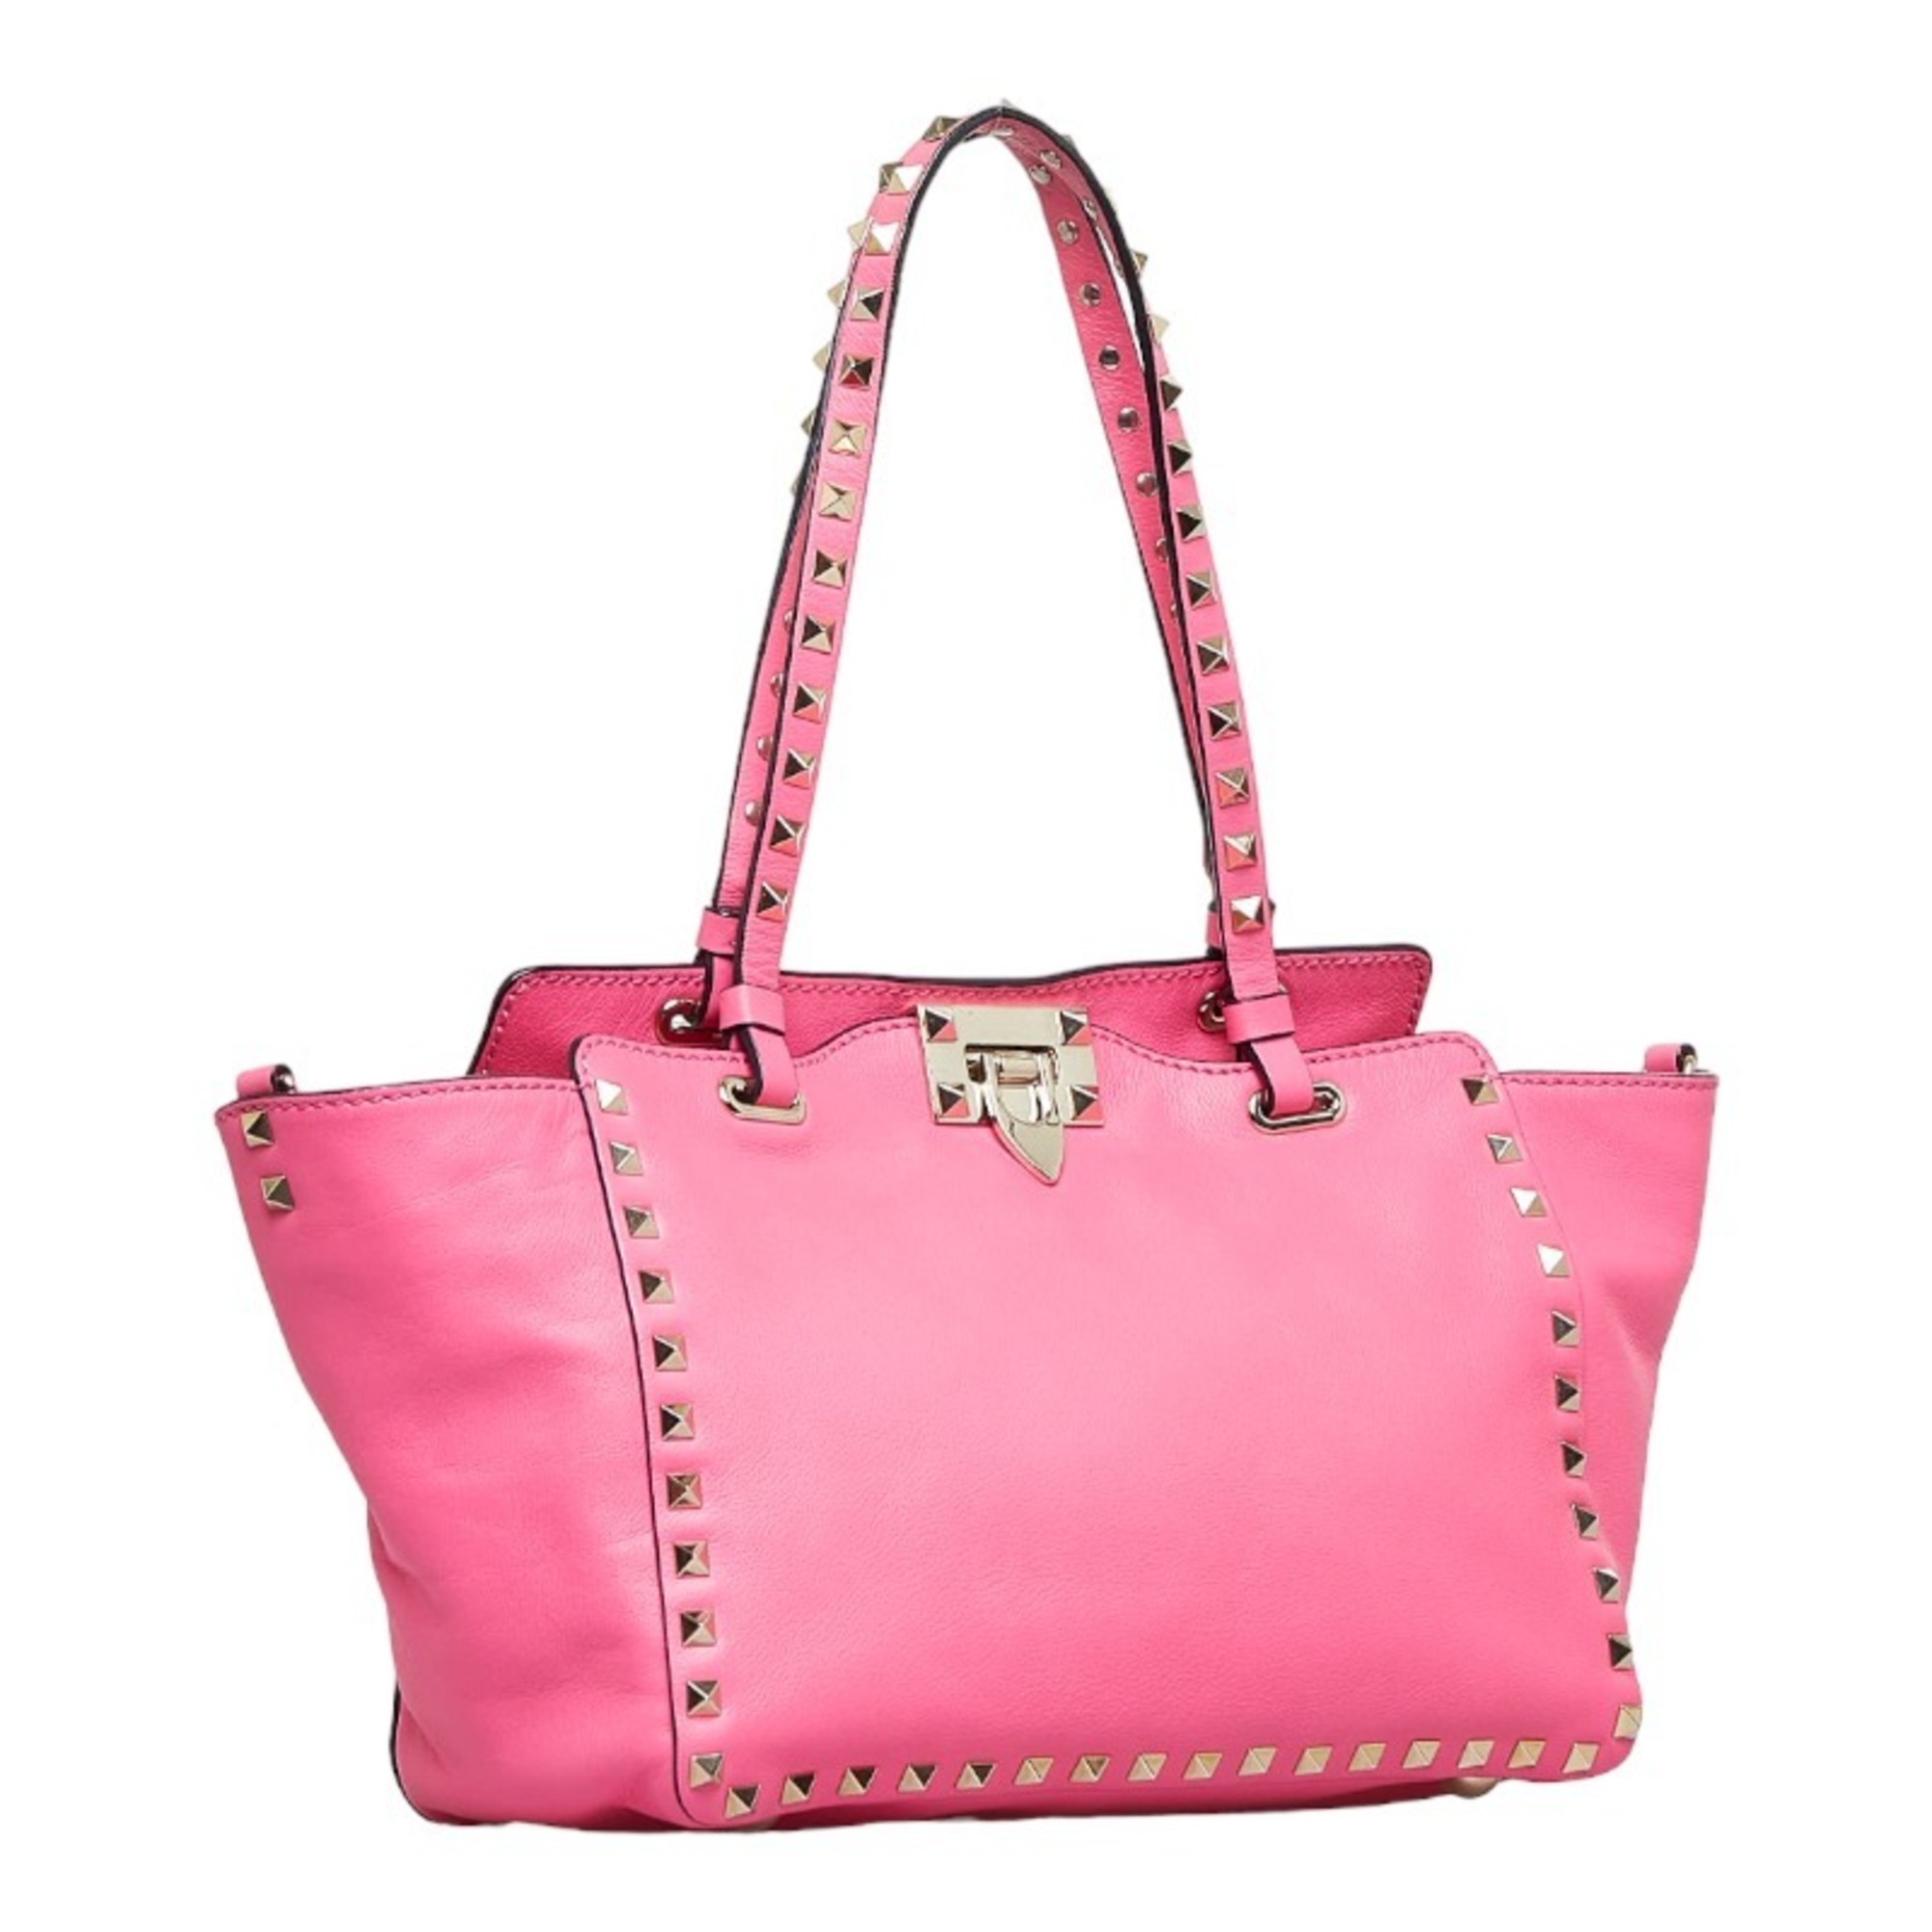 Valentino Rockstud handbag shoulder bag pink leather ladies VALENTINO